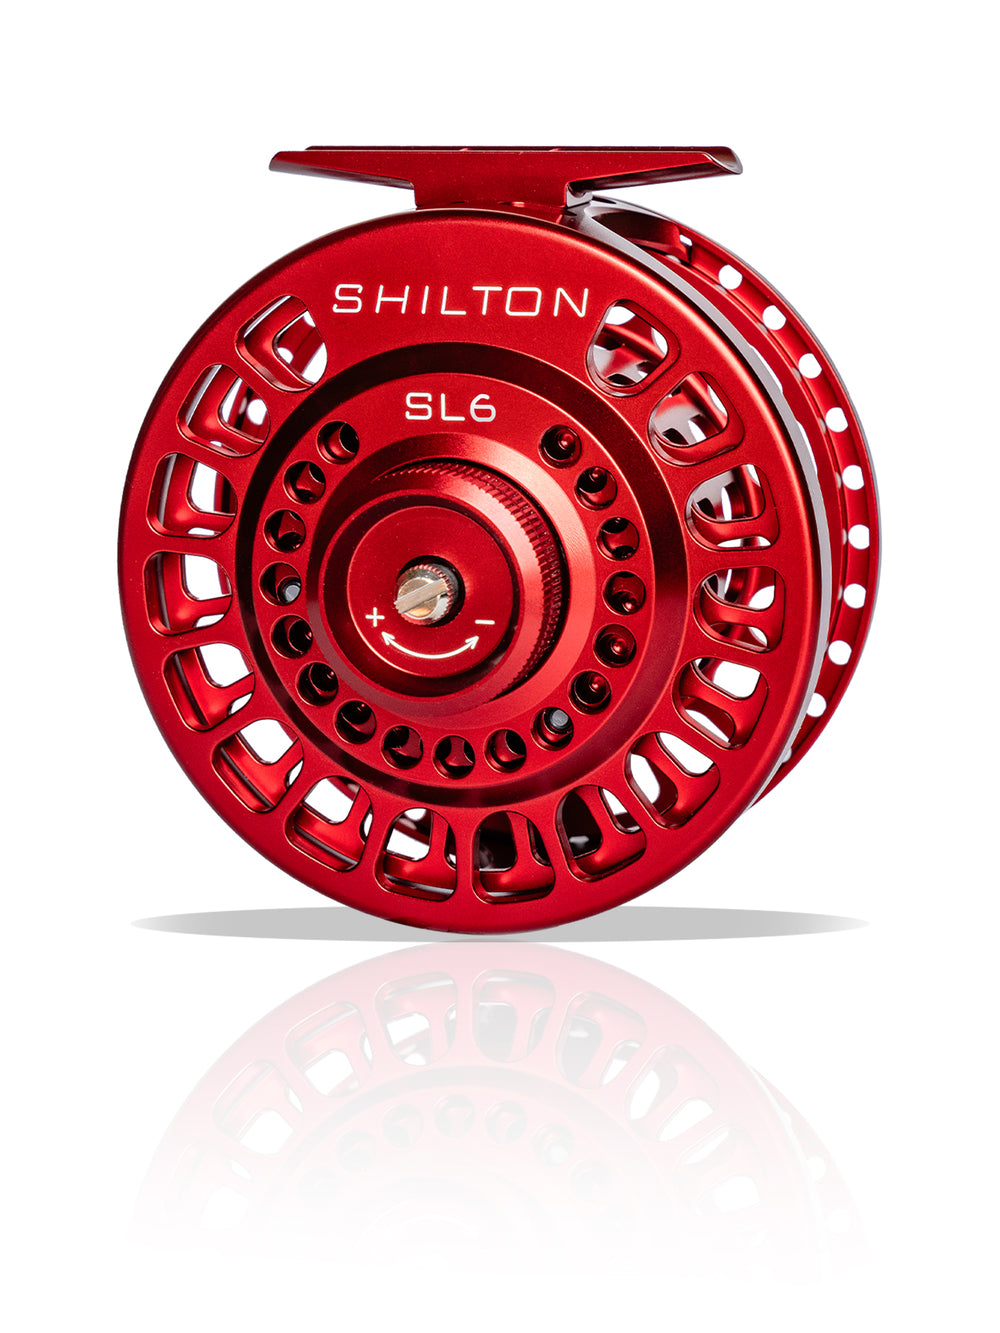 Shilton SL4 Reel (6-7wt) in Red